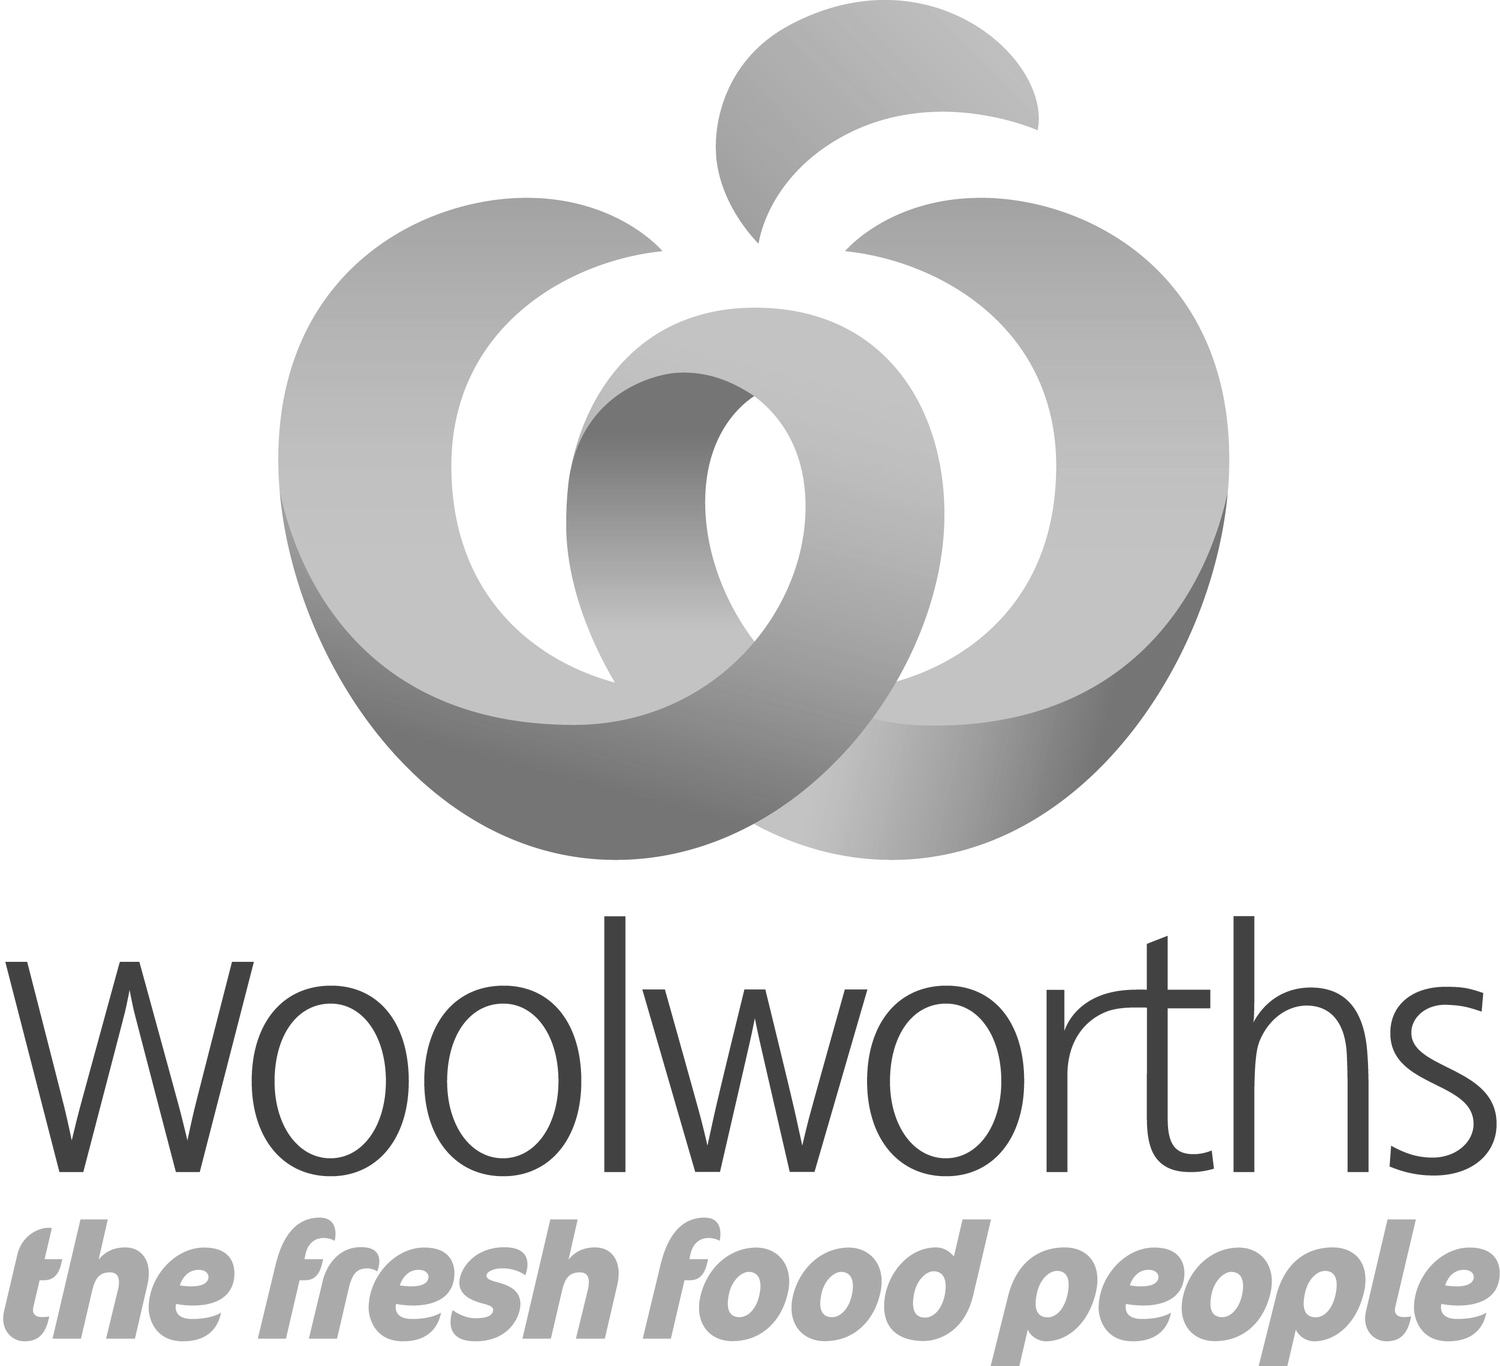 Woolworths_TFFP_stacked_CMYK.jpg